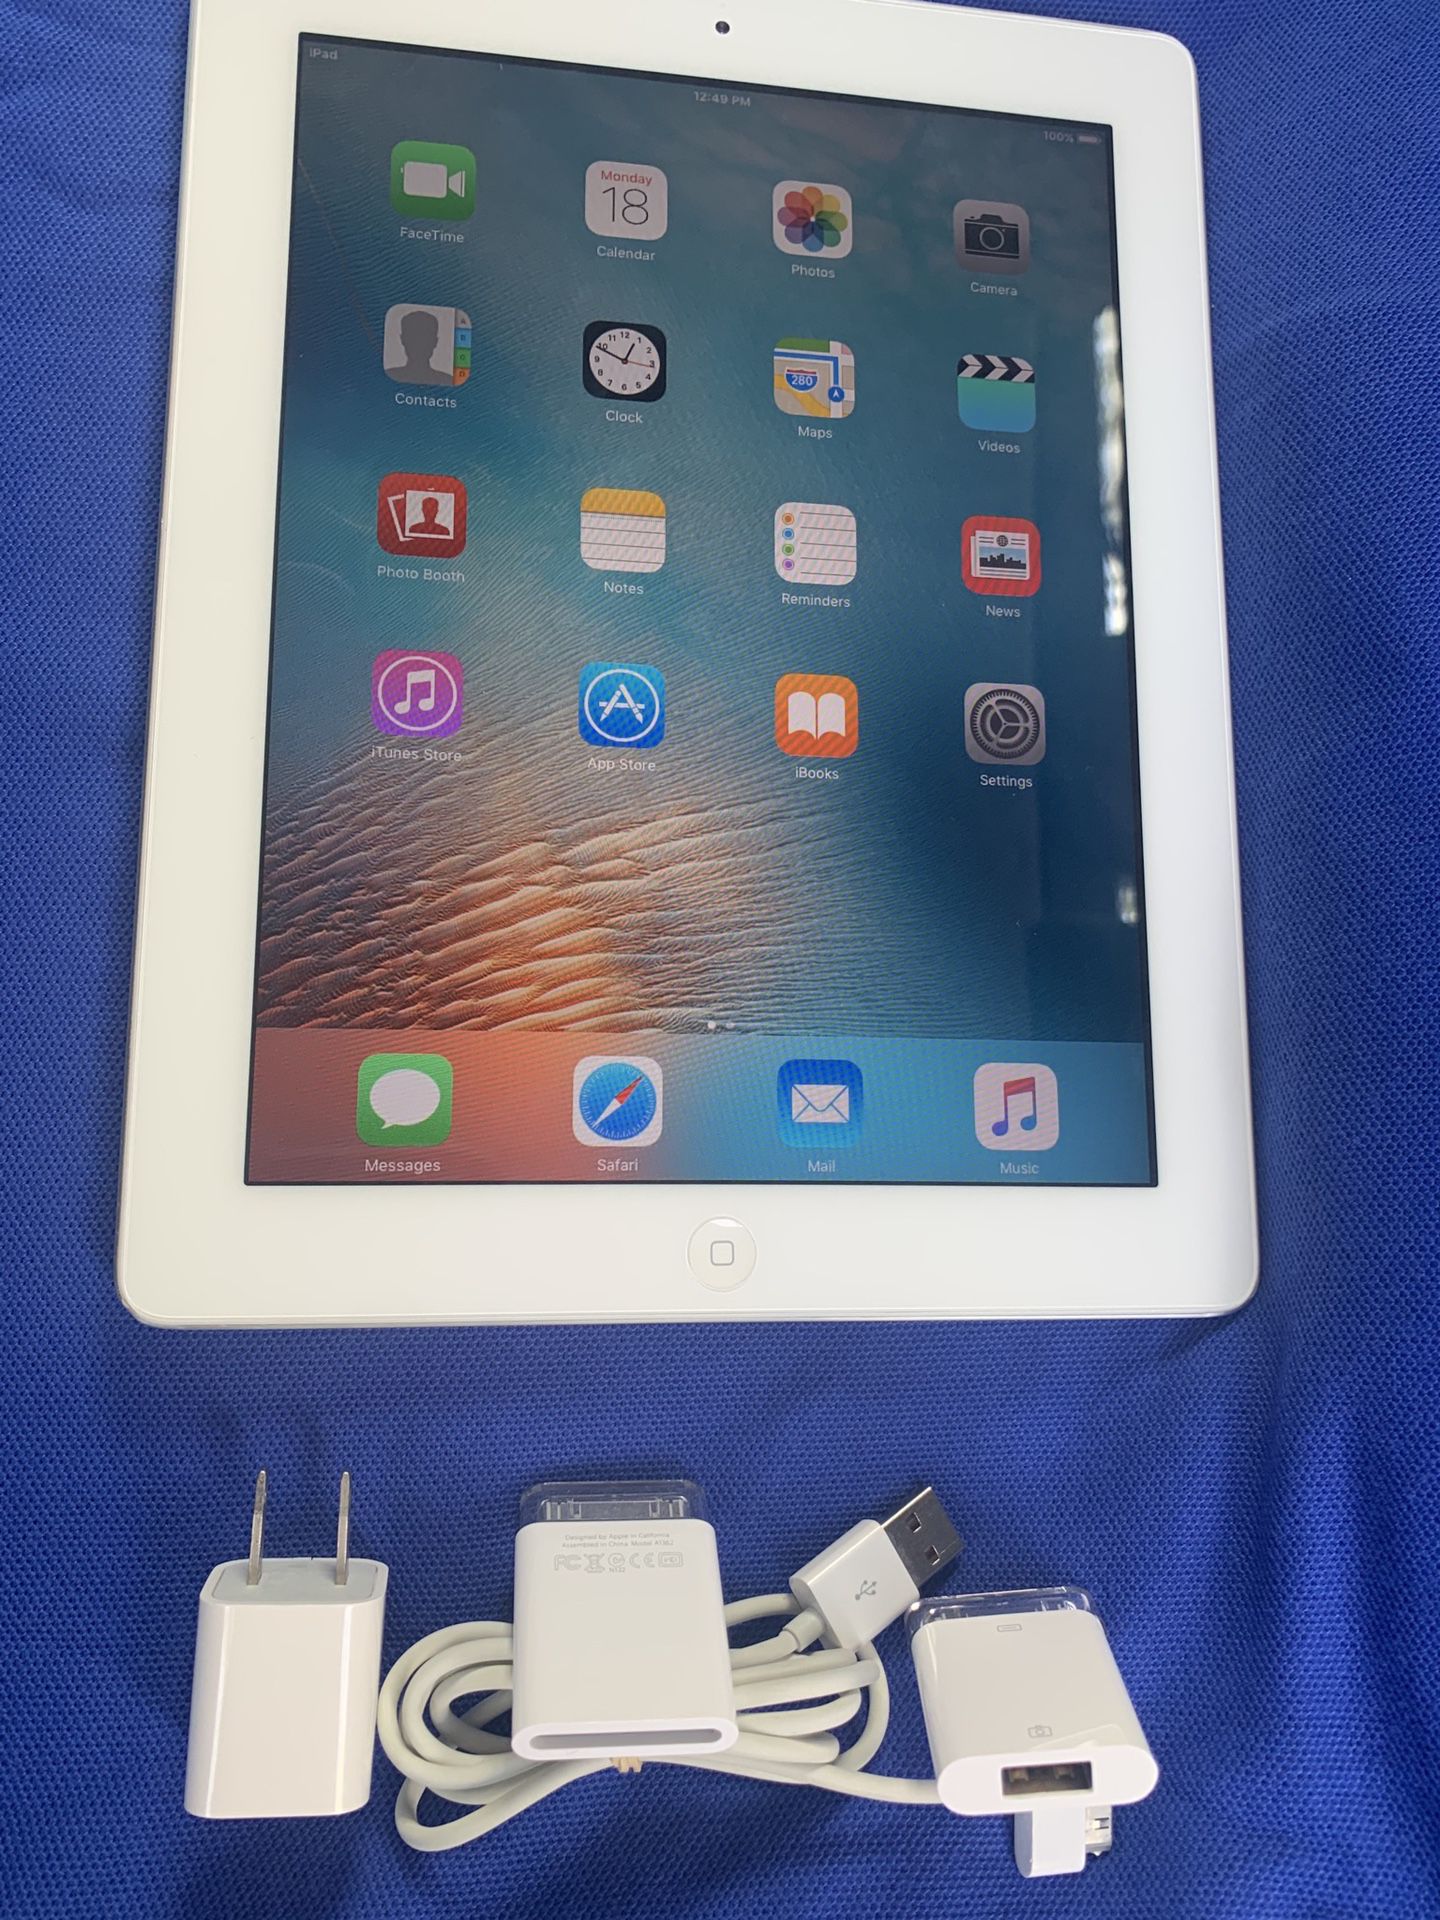 Apple iPad 2 Gen.MC981LL/A,64GB,Wi-Fi, 9.7in -White,version 9.3.5